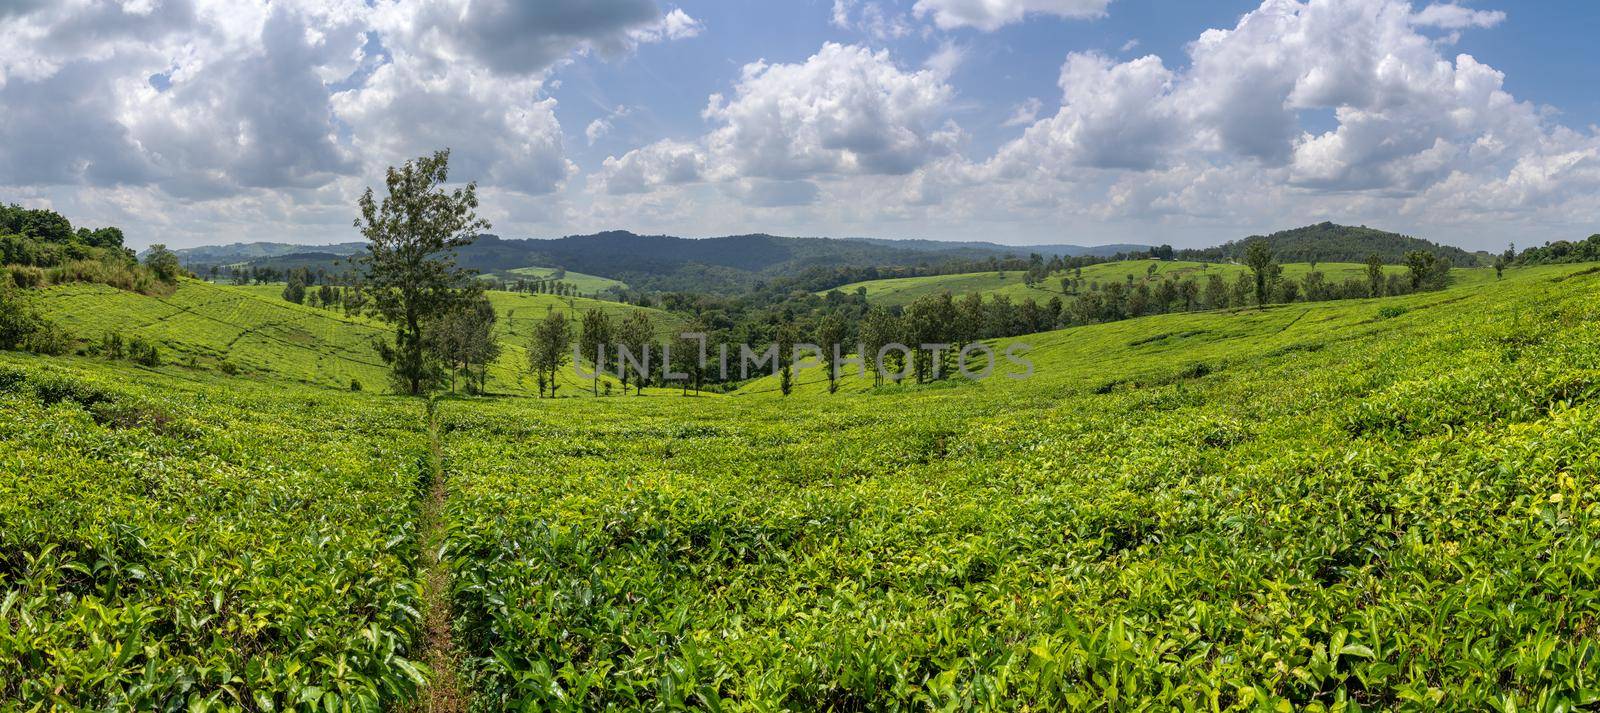 Tea fields, Uganda by alfotokunst